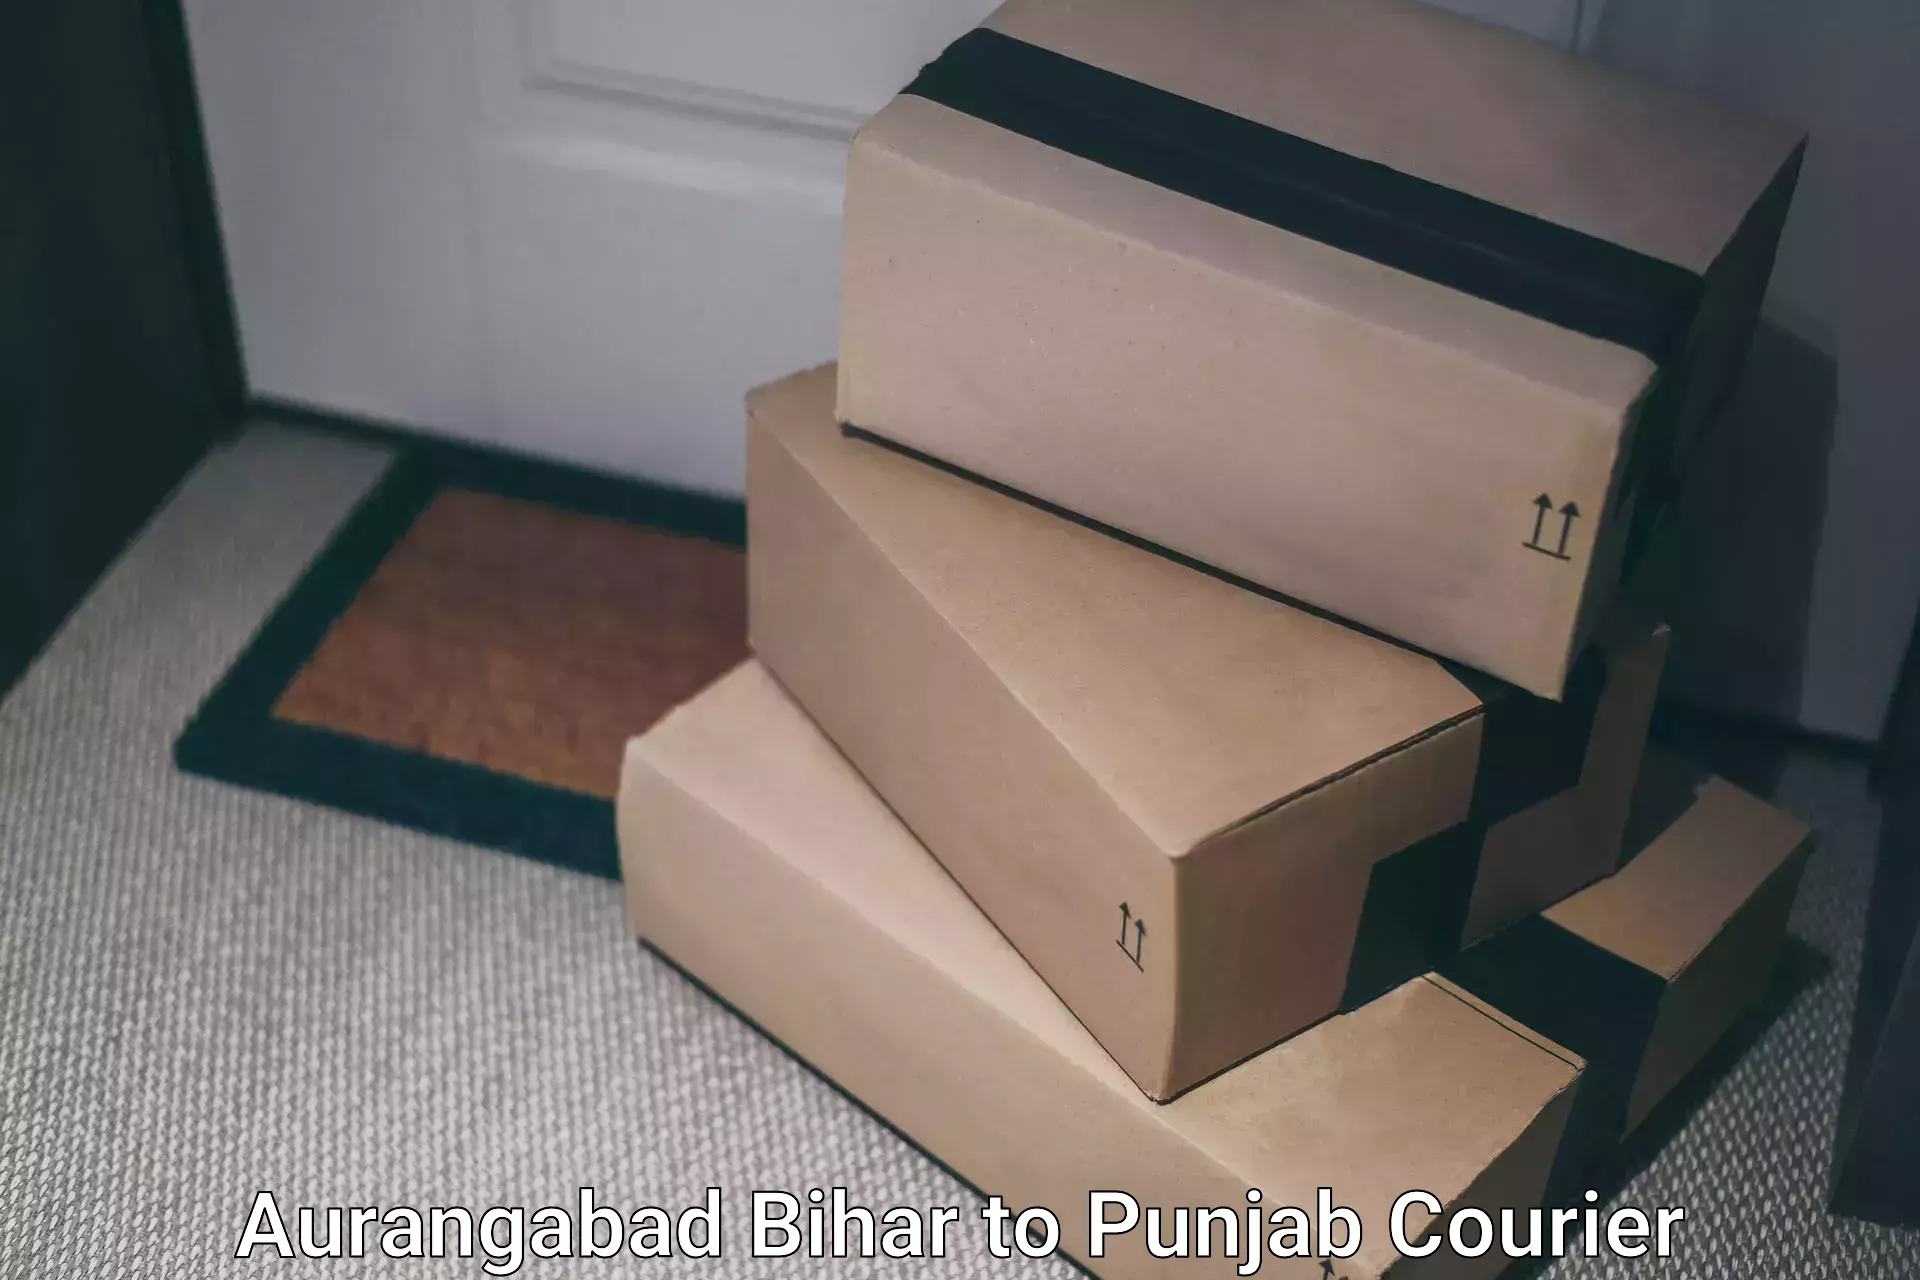 End-to-end delivery Aurangabad Bihar to Khanna